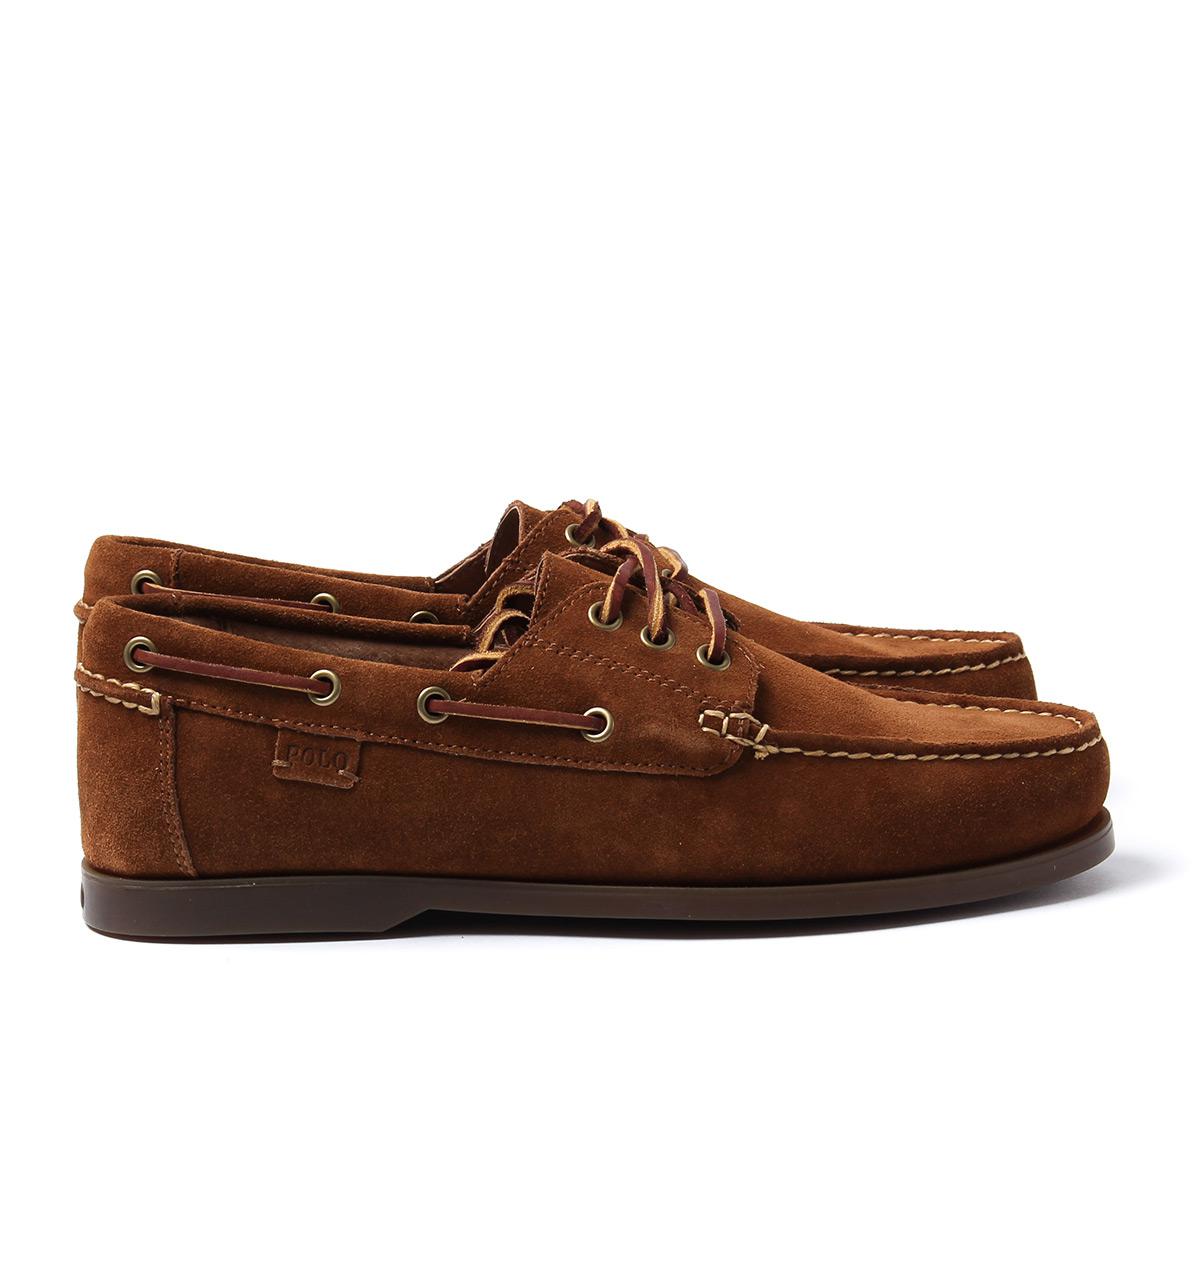 Lyst - Polo Ralph Lauren Bienne Ii New Snuff Boat Shoes in Brown for Men